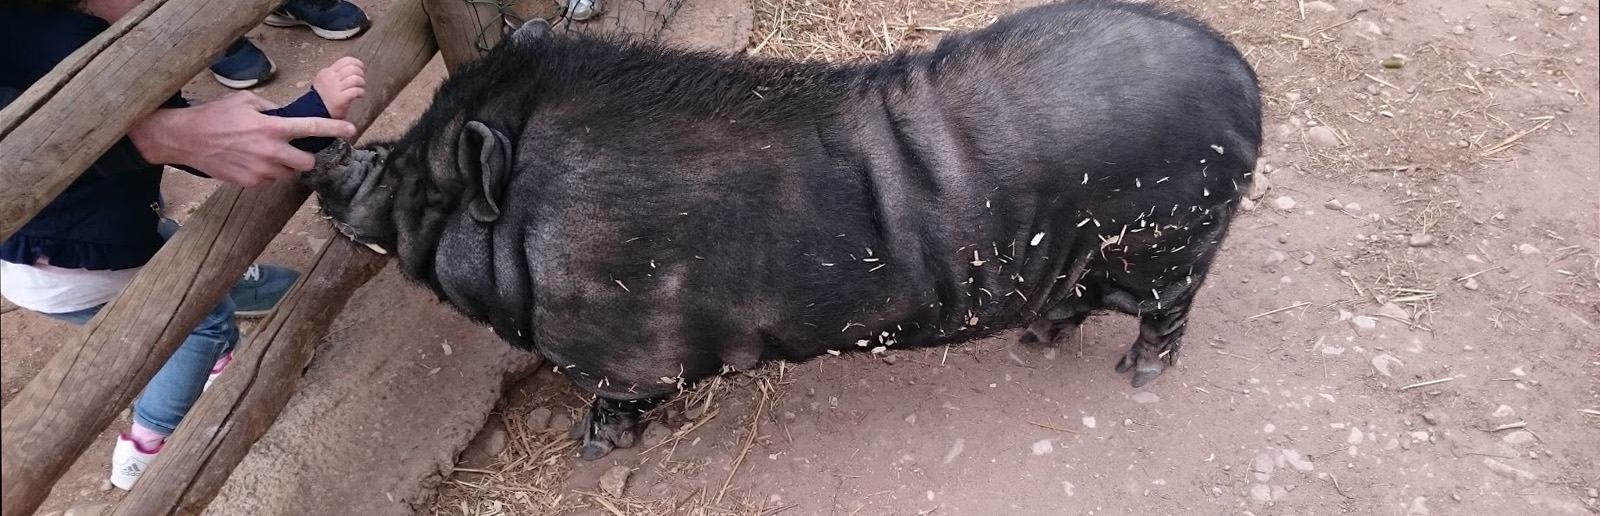 En Lobo Park Antequera vive un cerdo tailandés